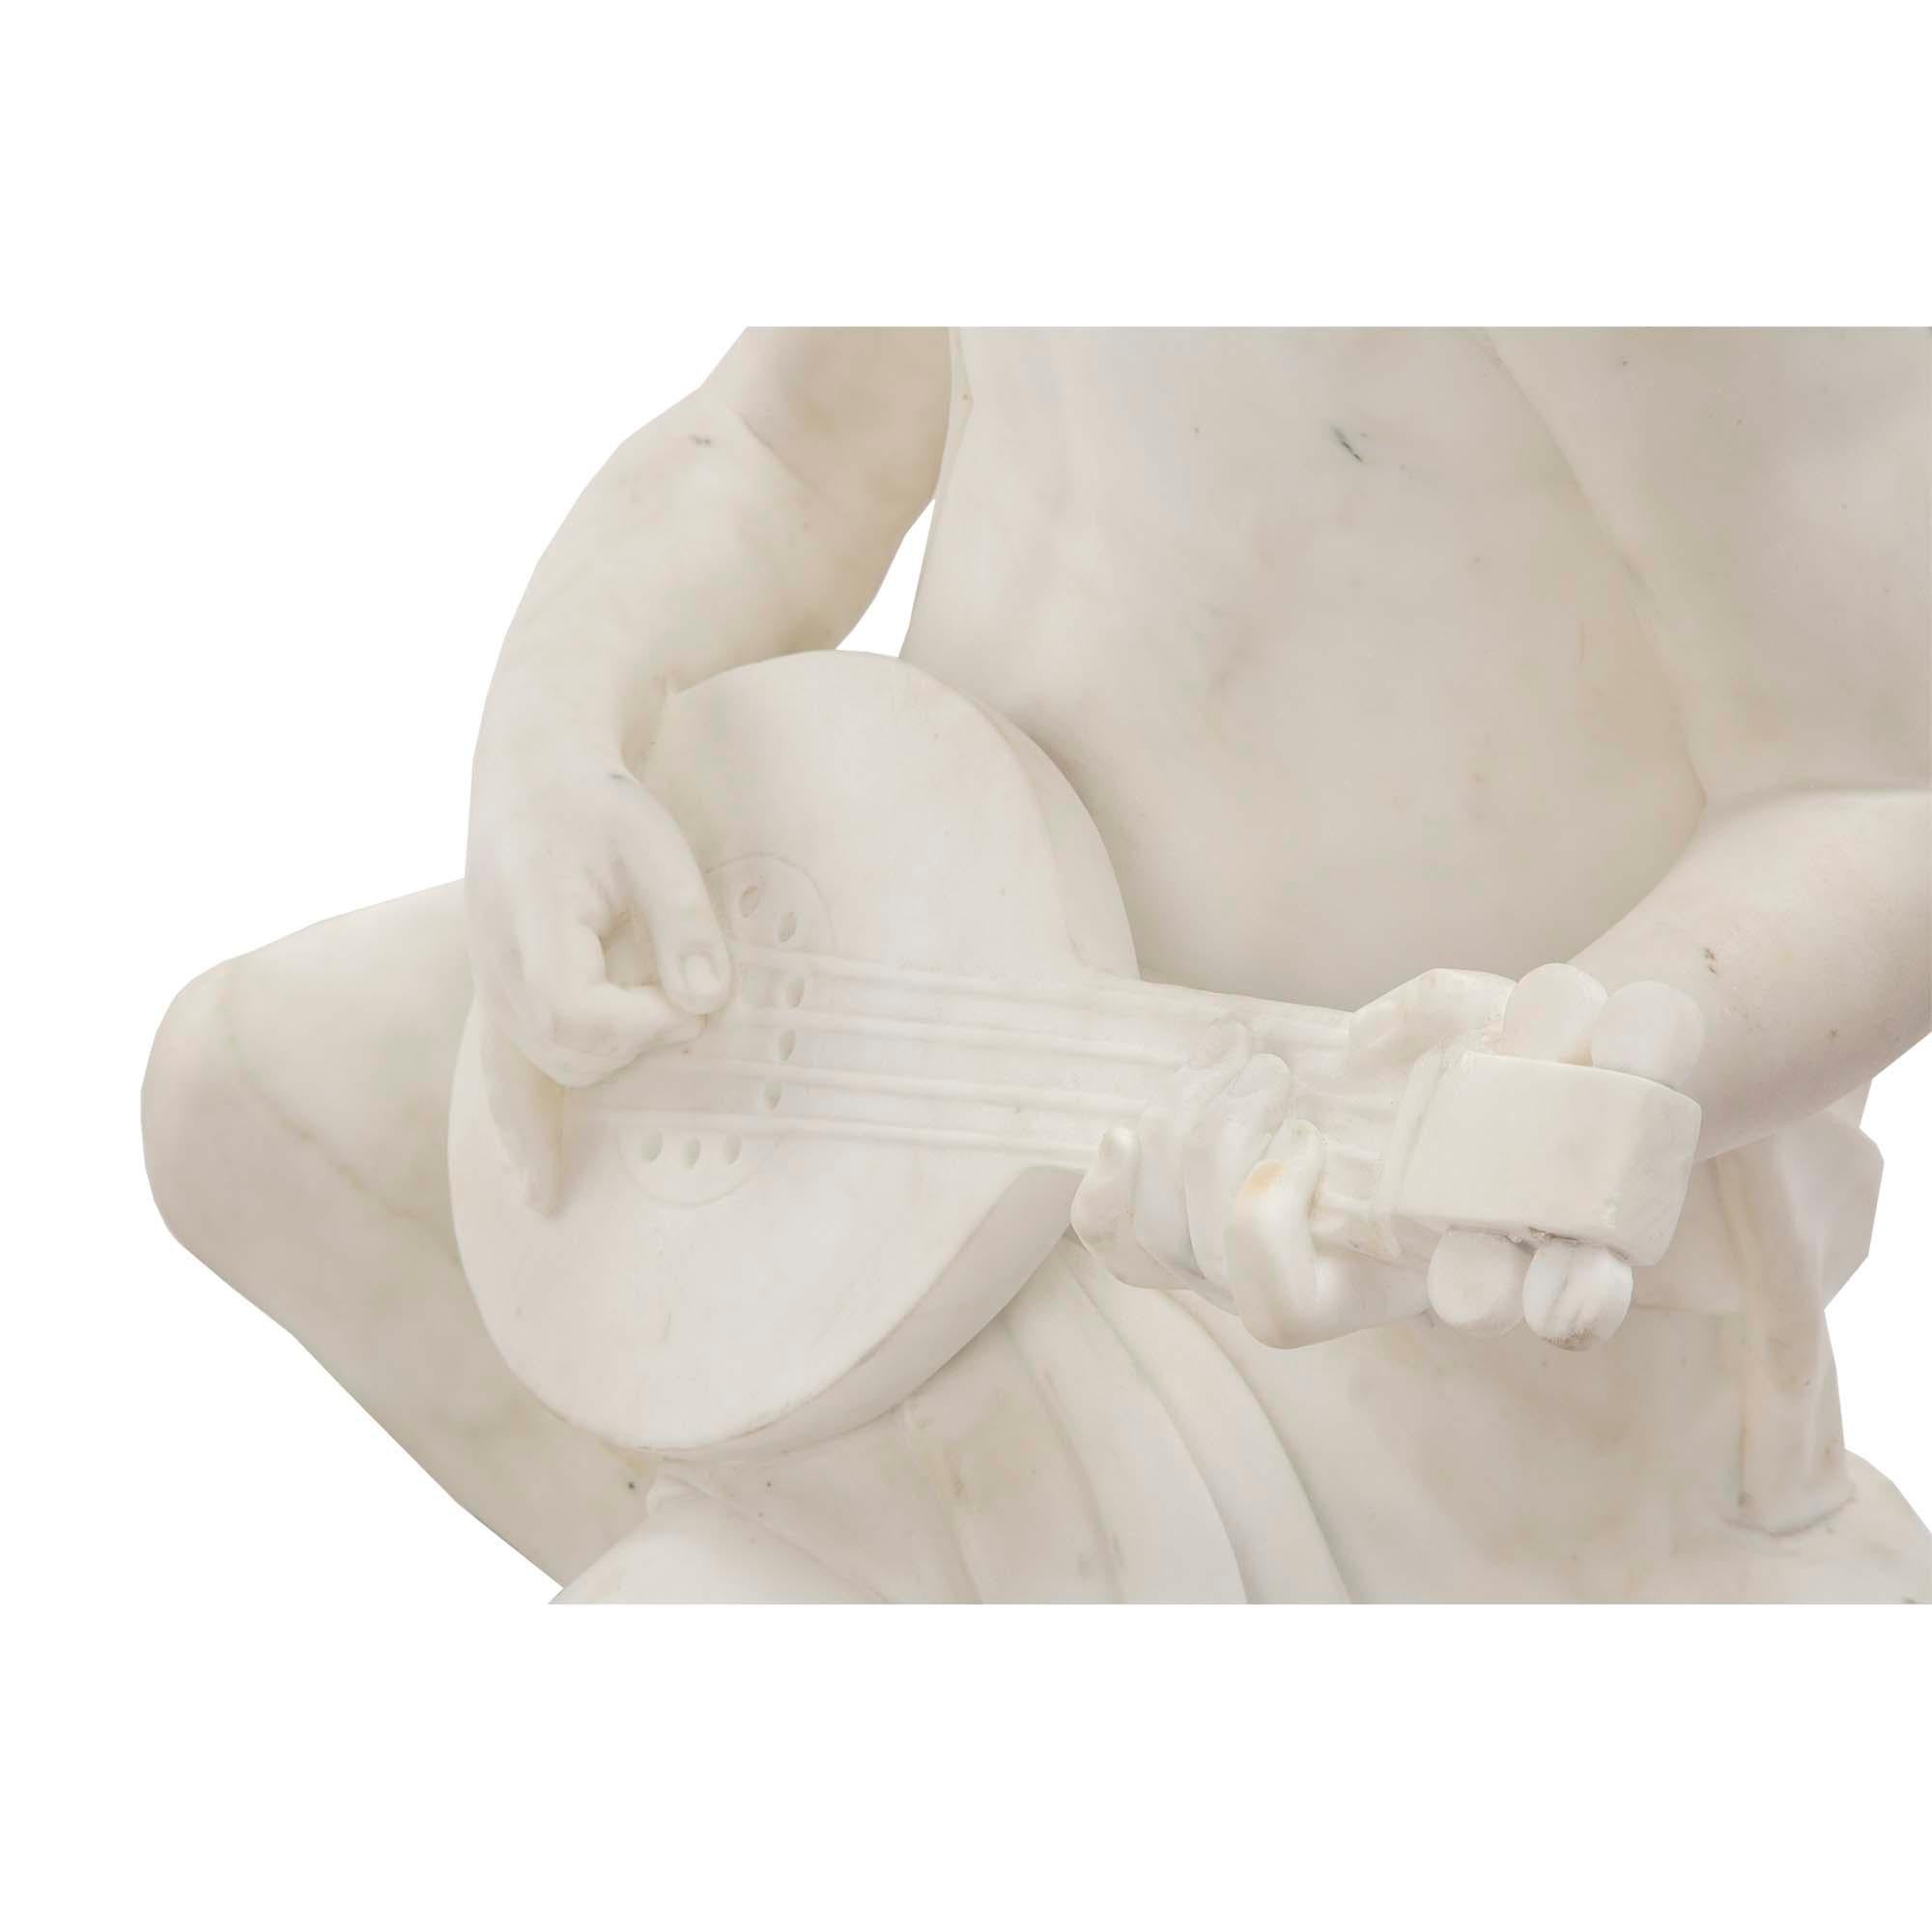 Italian 19th Century White Carrara Marble Statue of a Little Winged Cherub For Sale 3